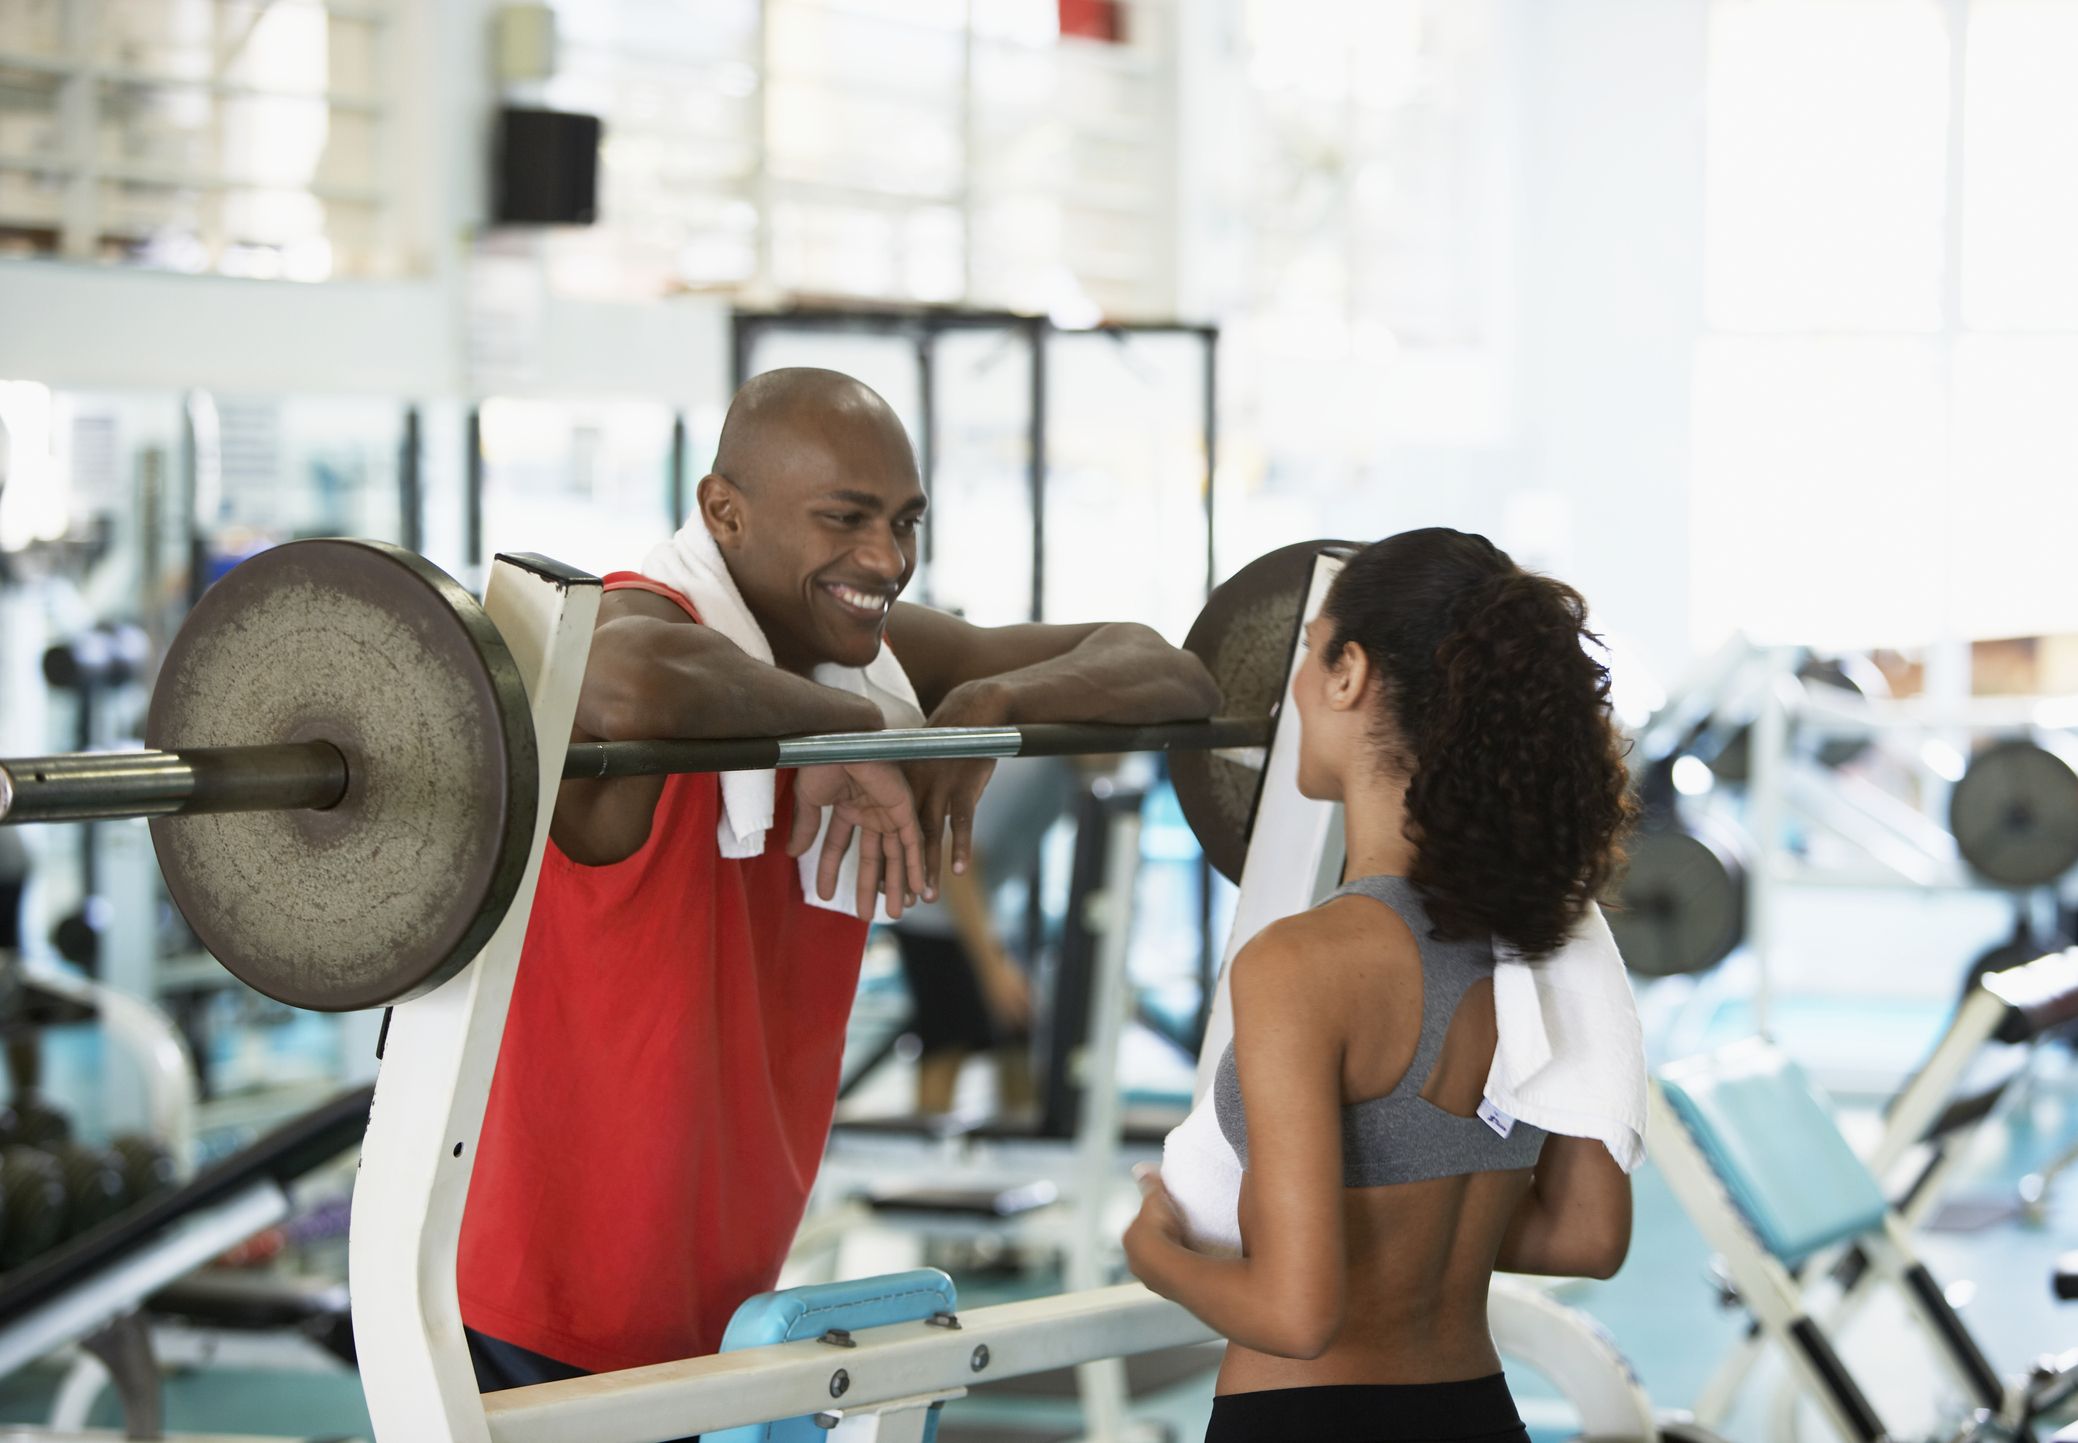 You think wife training gym